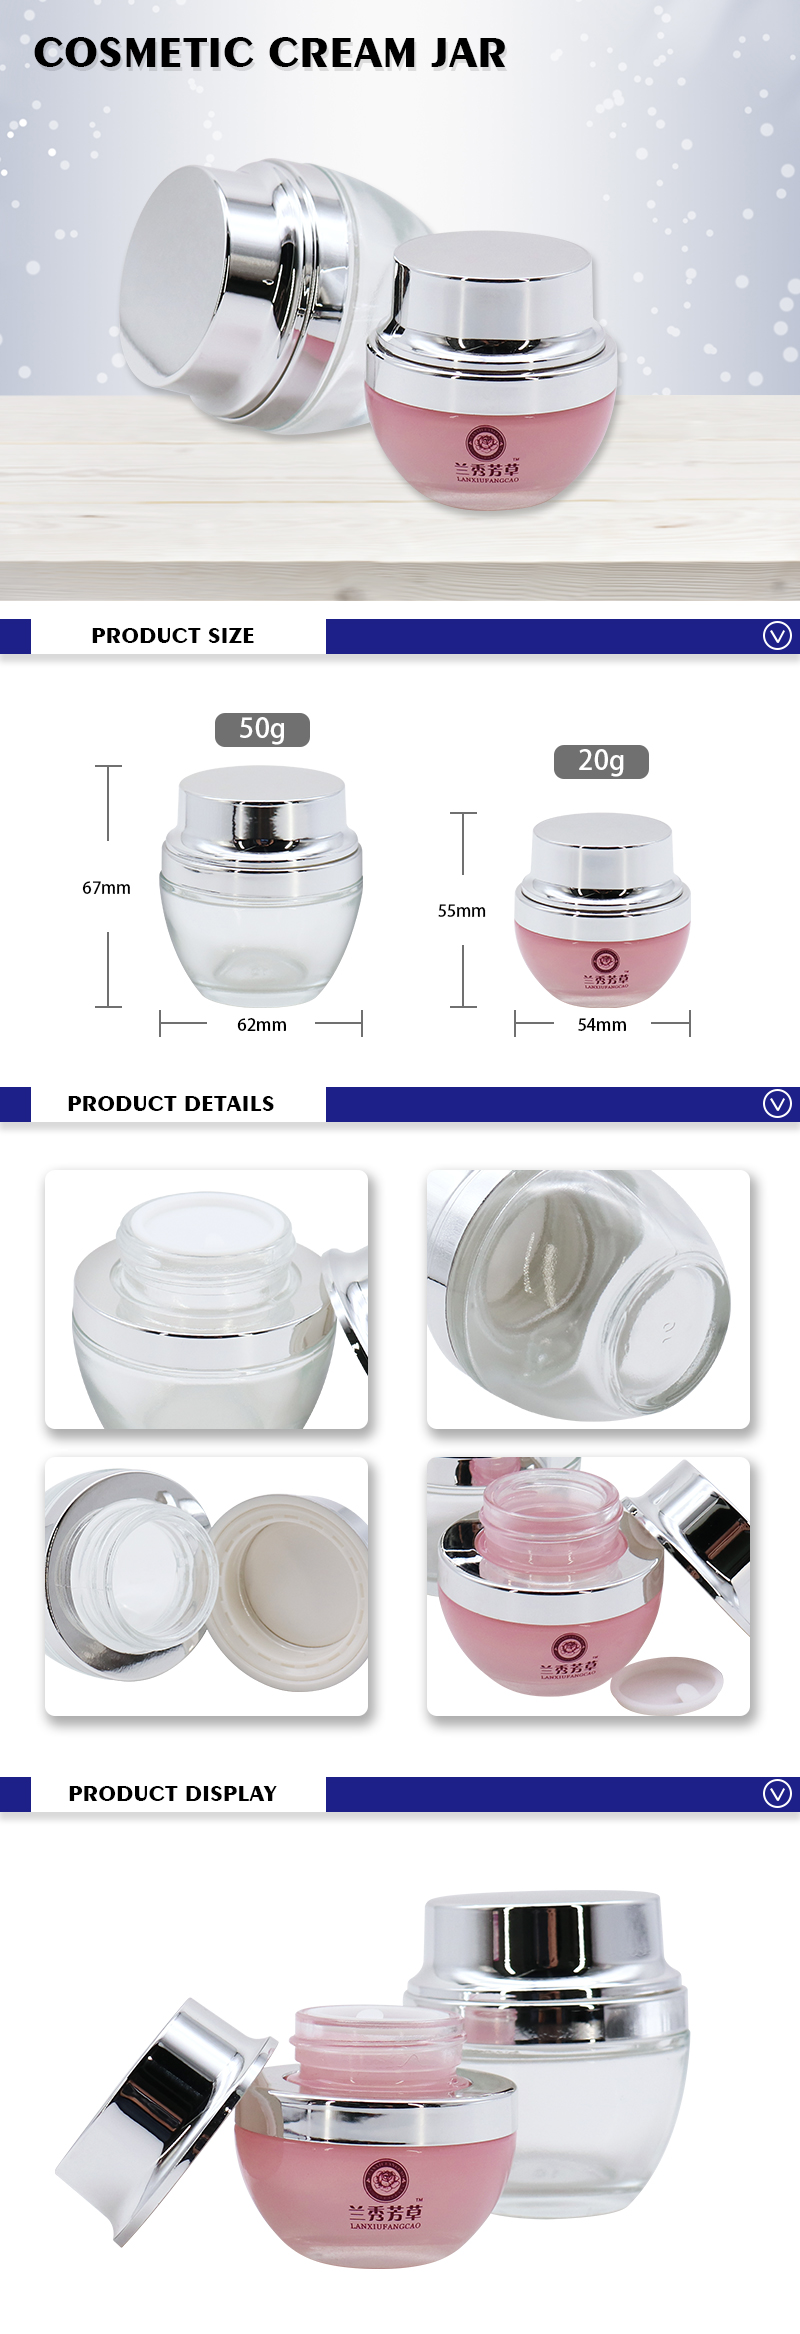 Glass Cosmetic Cream Jar 20g